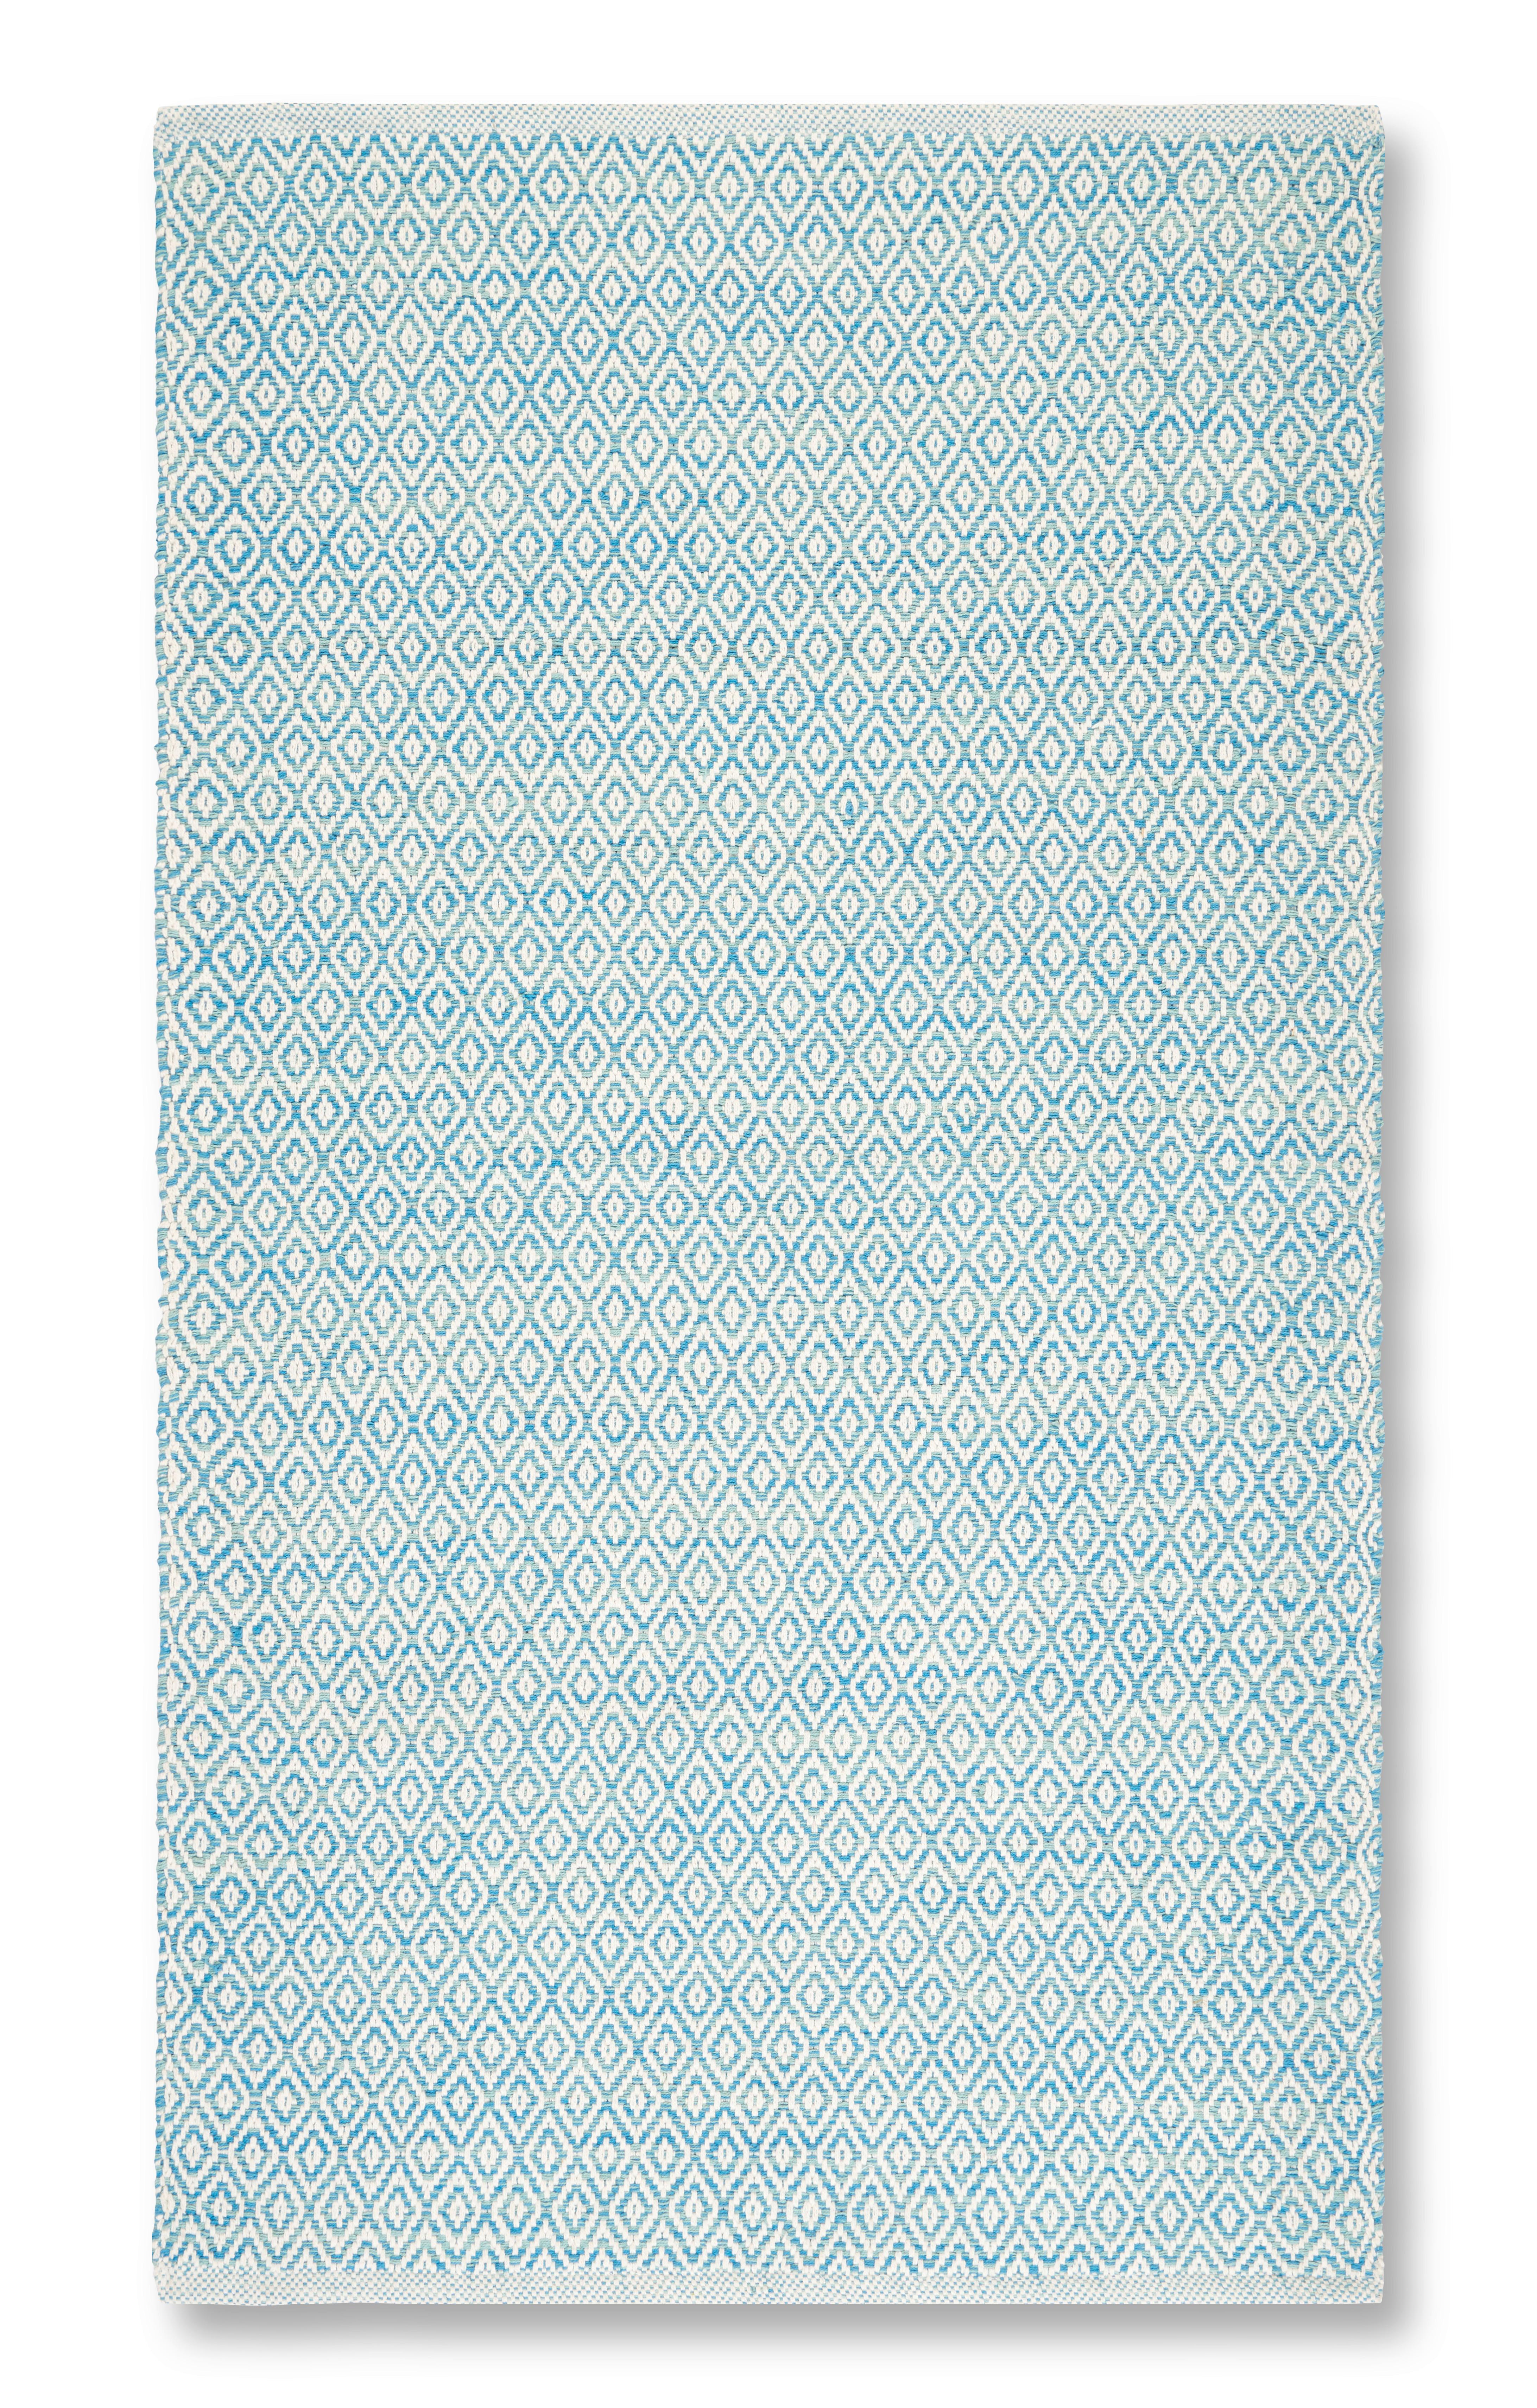 Handwebeteppich Carola 1 in Blau ca. 60x120cm - Blau, Basics, Textil (60/120cm) - Modern Living